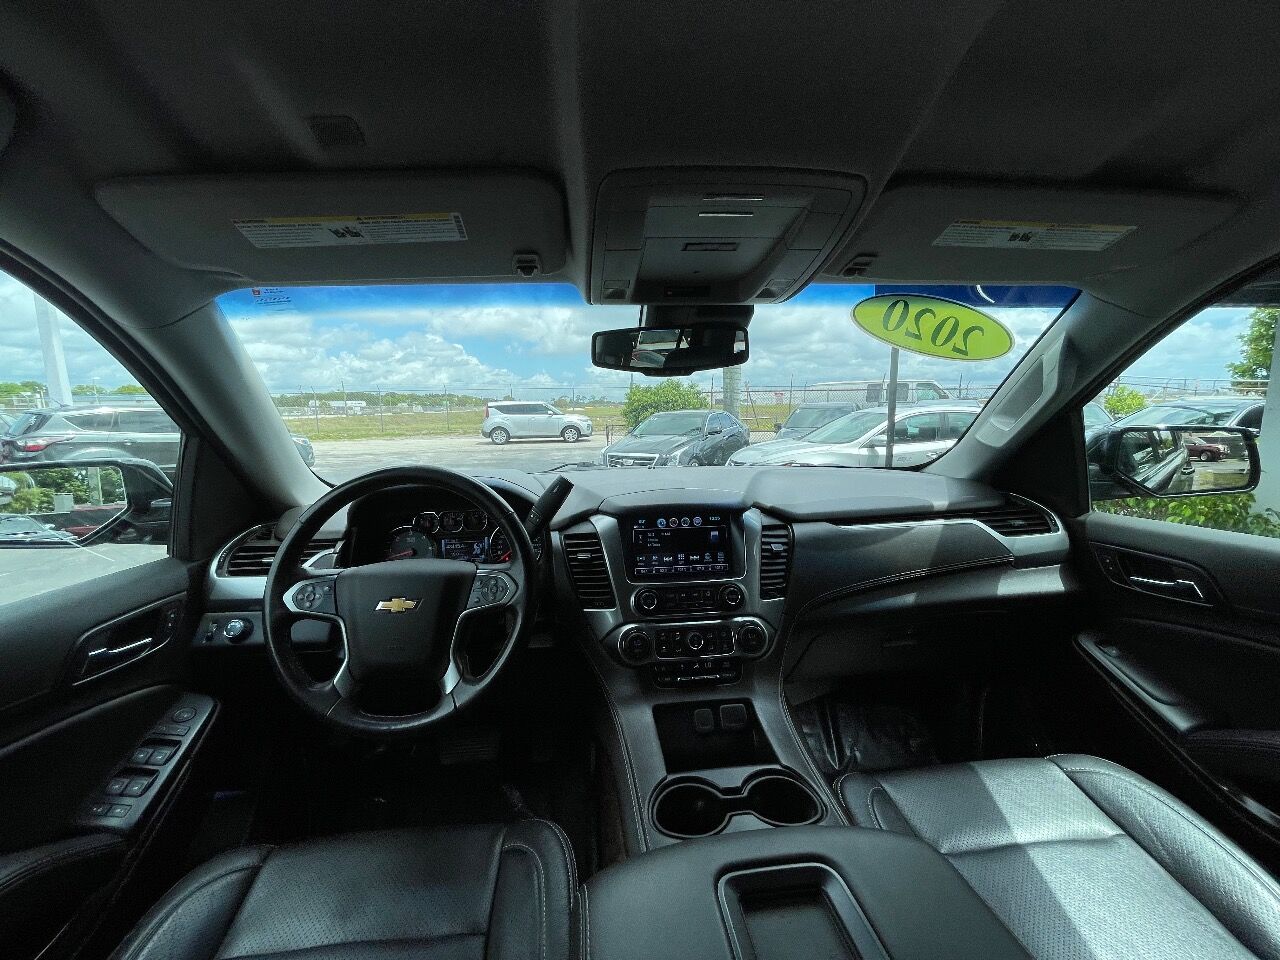 2020 CHEVROLET Tahoe SUV / Crossover - $29,900